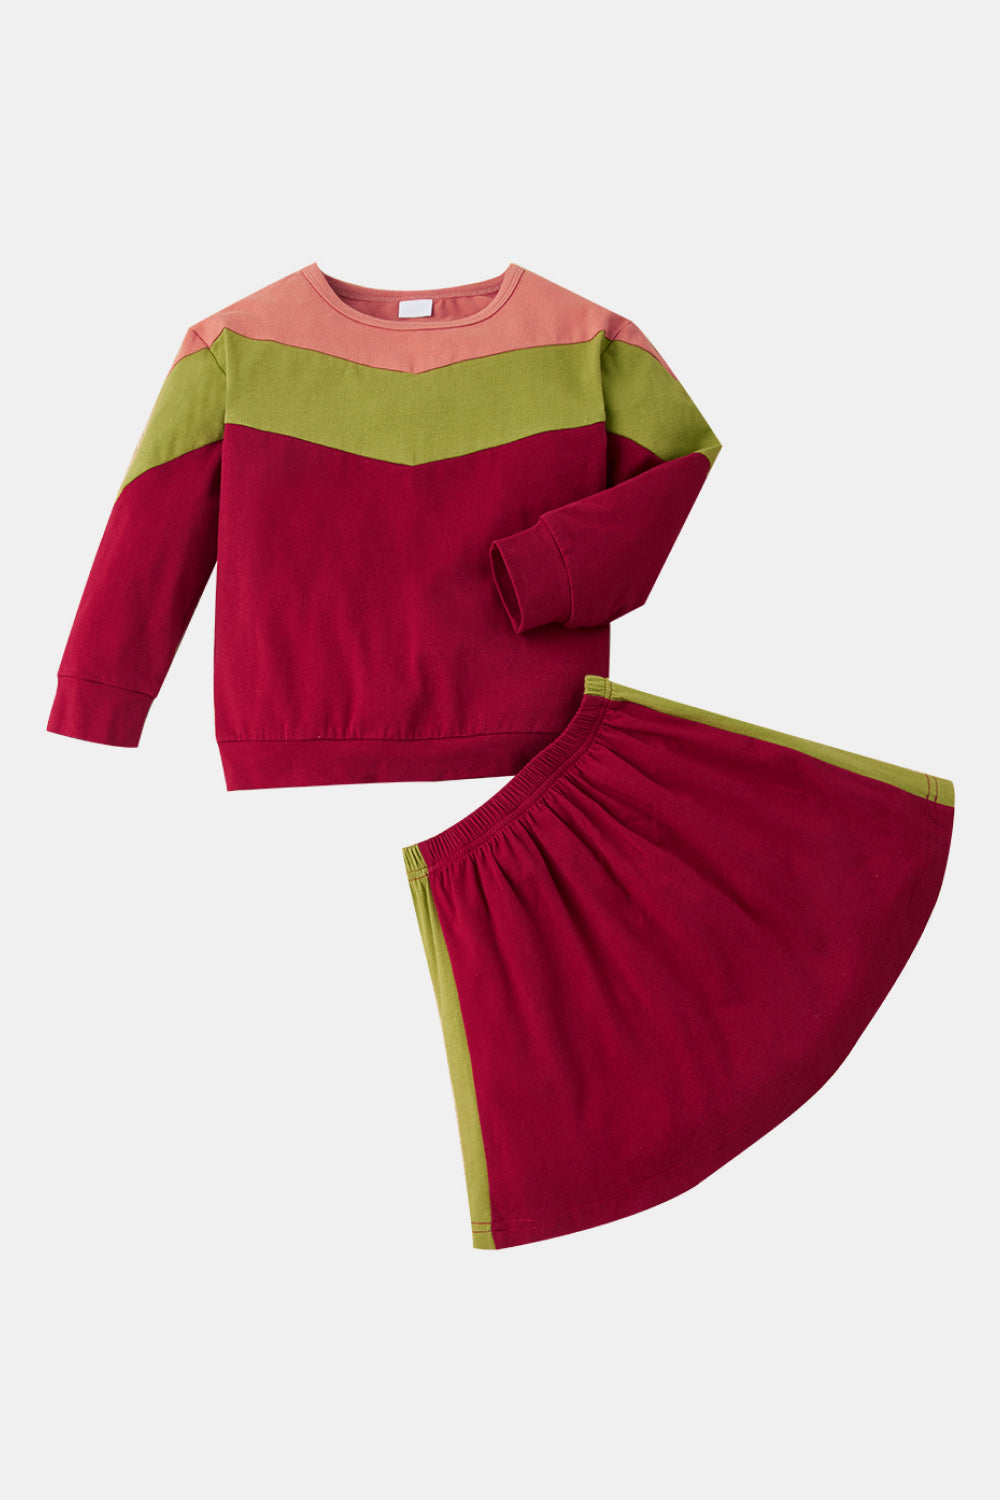 Girls Color Block Tee Shirt and Skirt Set